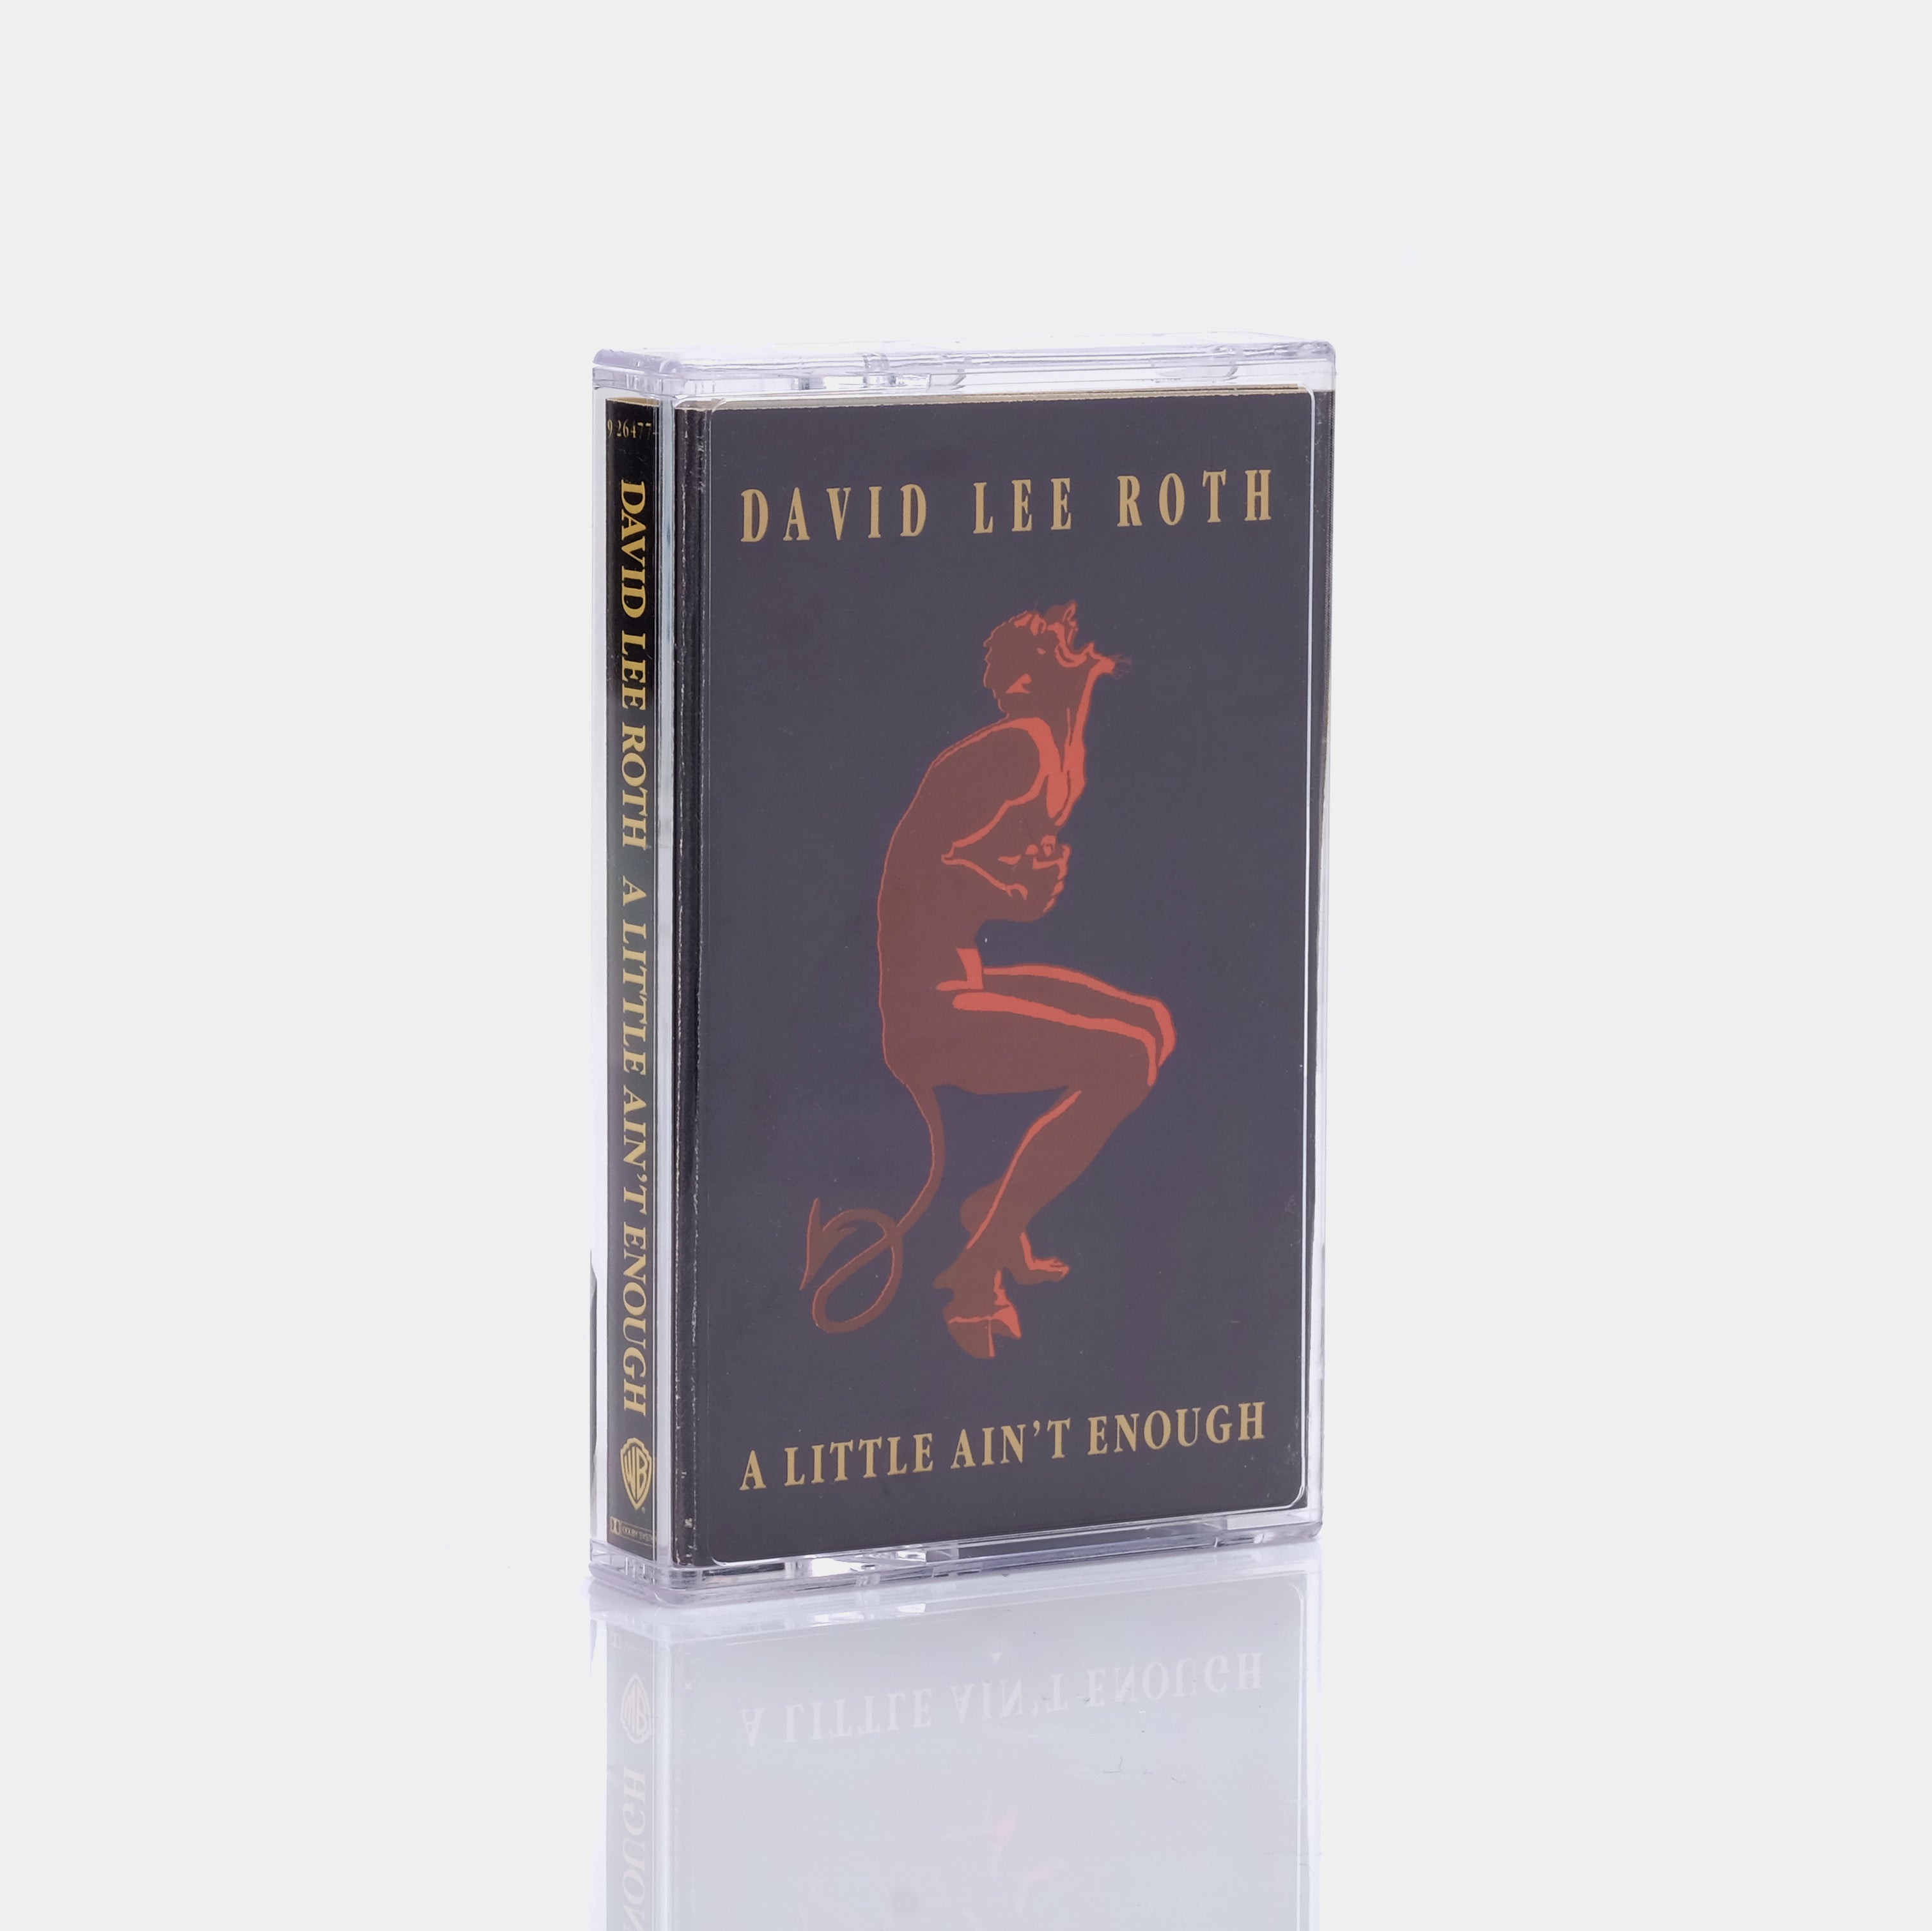 David Lee Roth - A Little Ain't Enough Cassette Tape